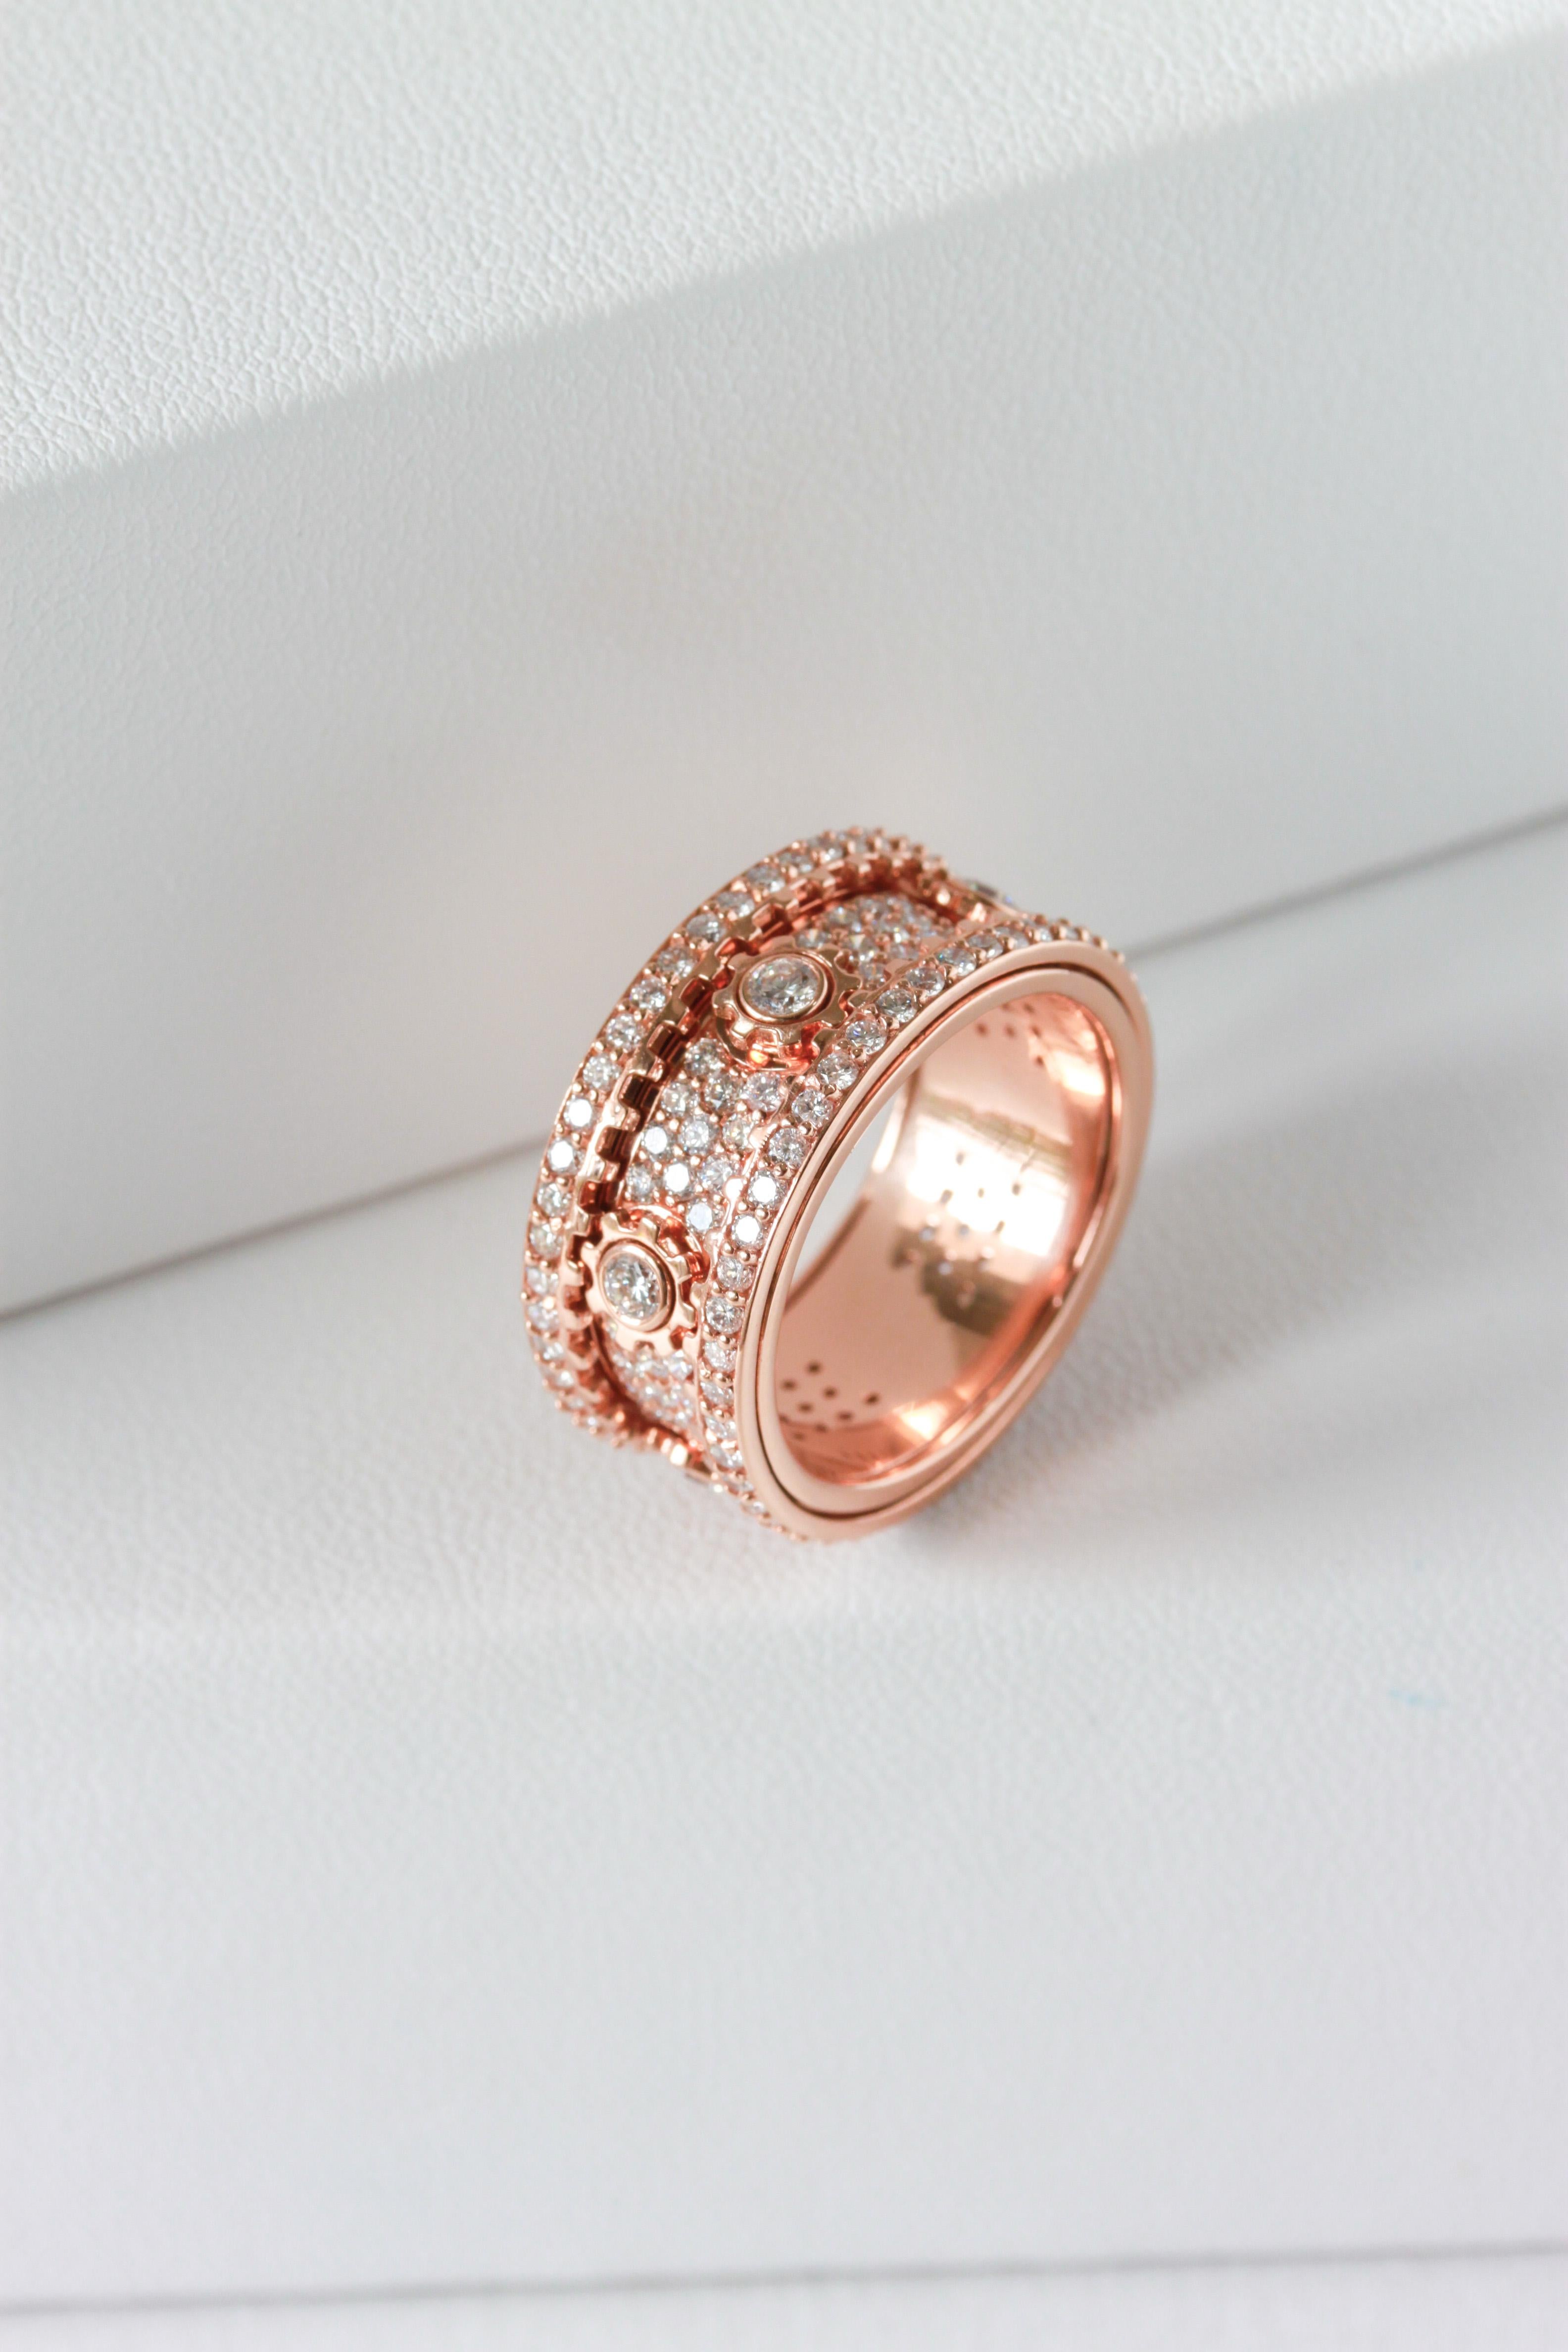 Artisan Diamond Interactive Gear Ring in 18K Rose Gold with 2.16ct Natural VVS Diamonds